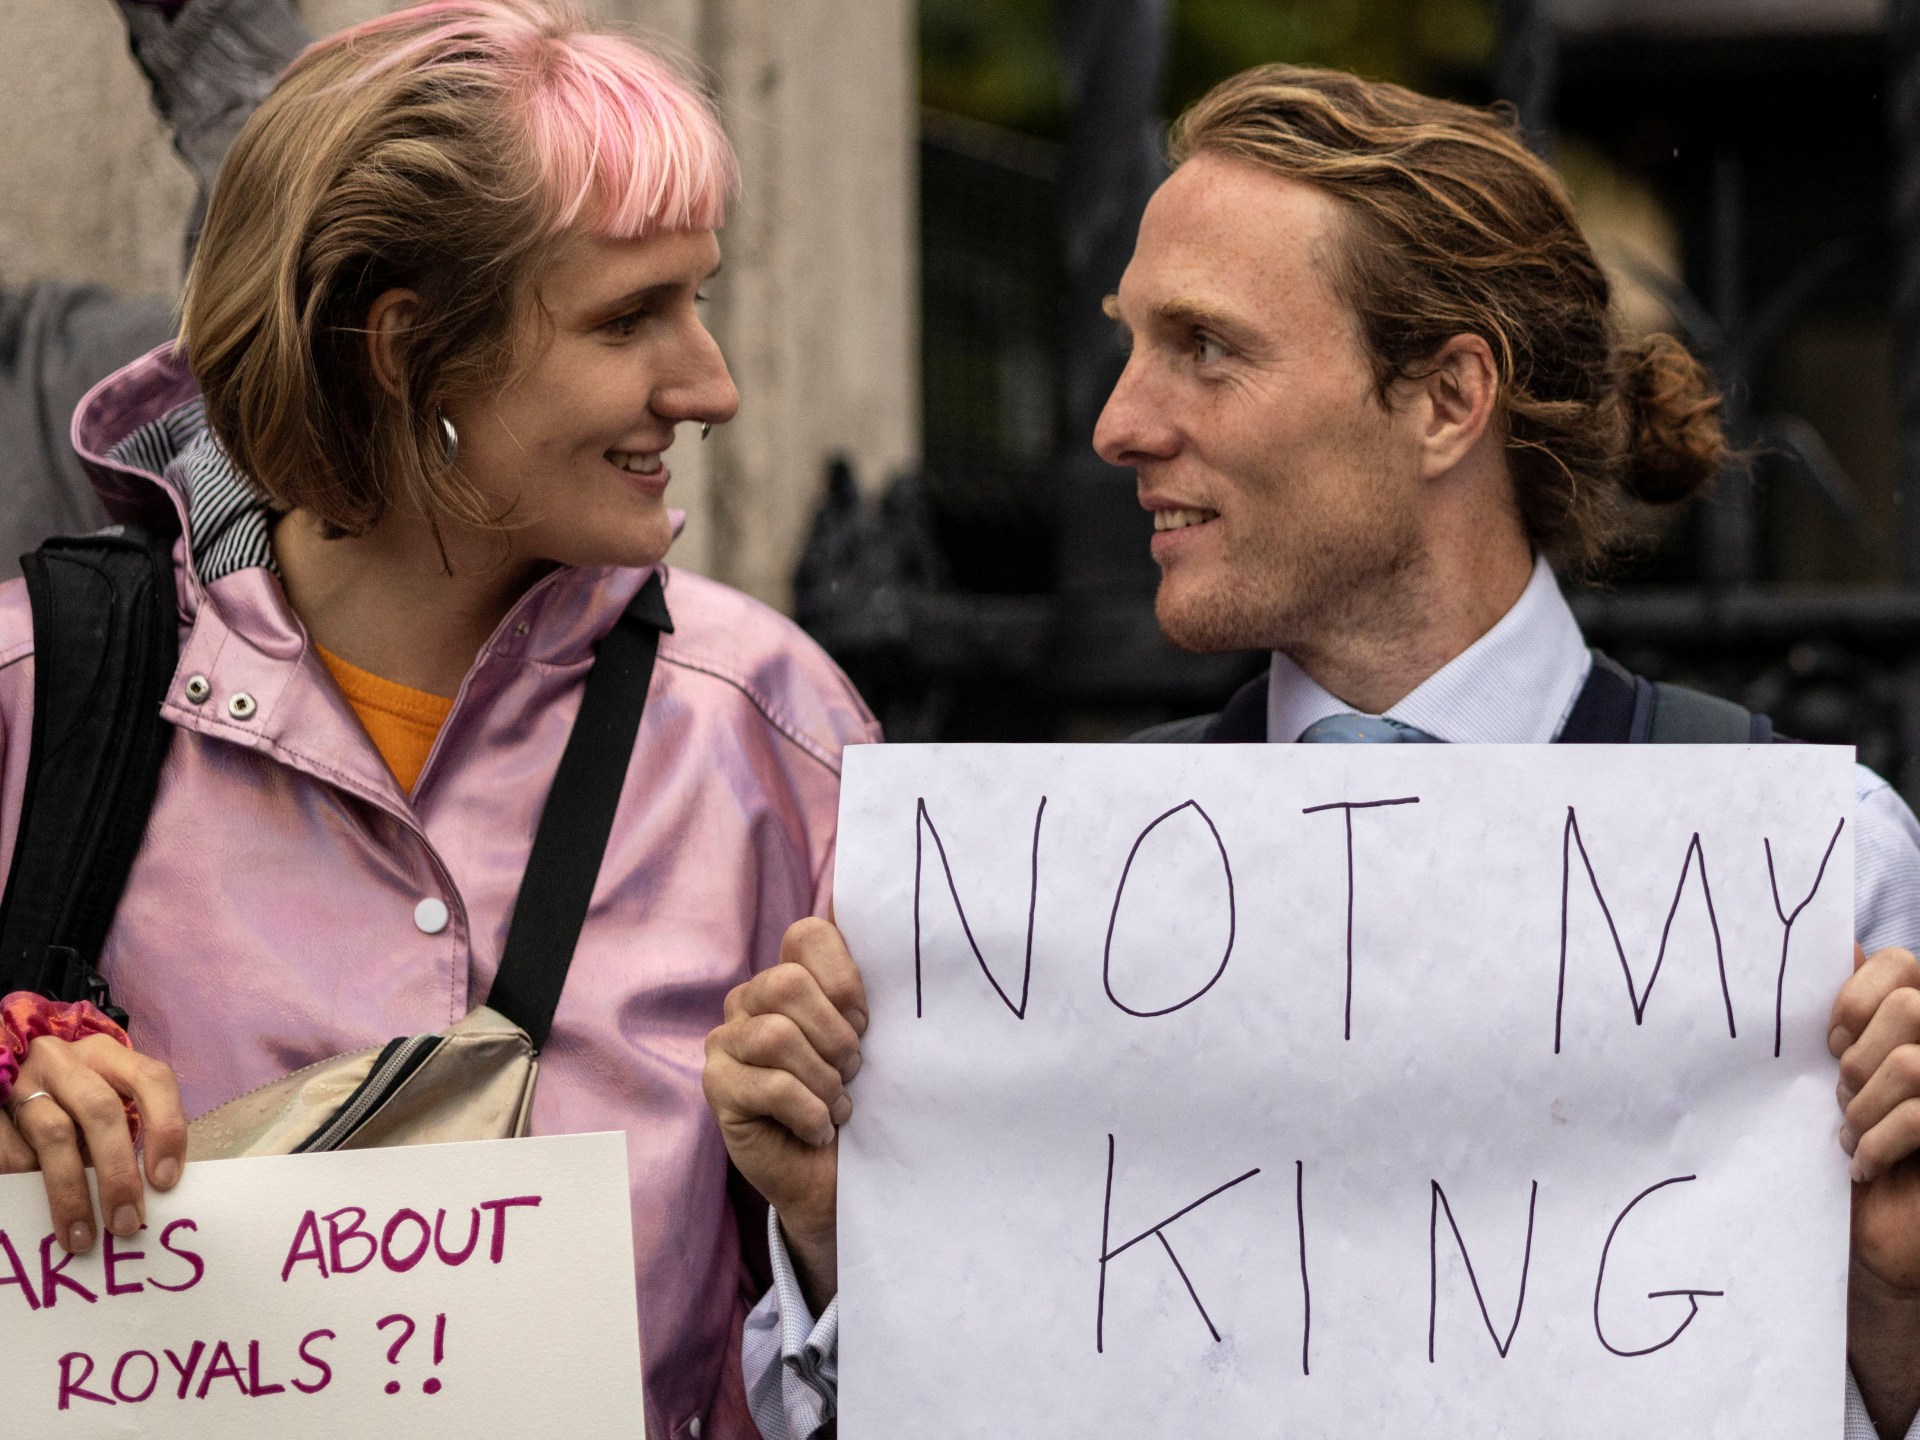 Arrest of UK anti-royal protesters raises free speech concerns